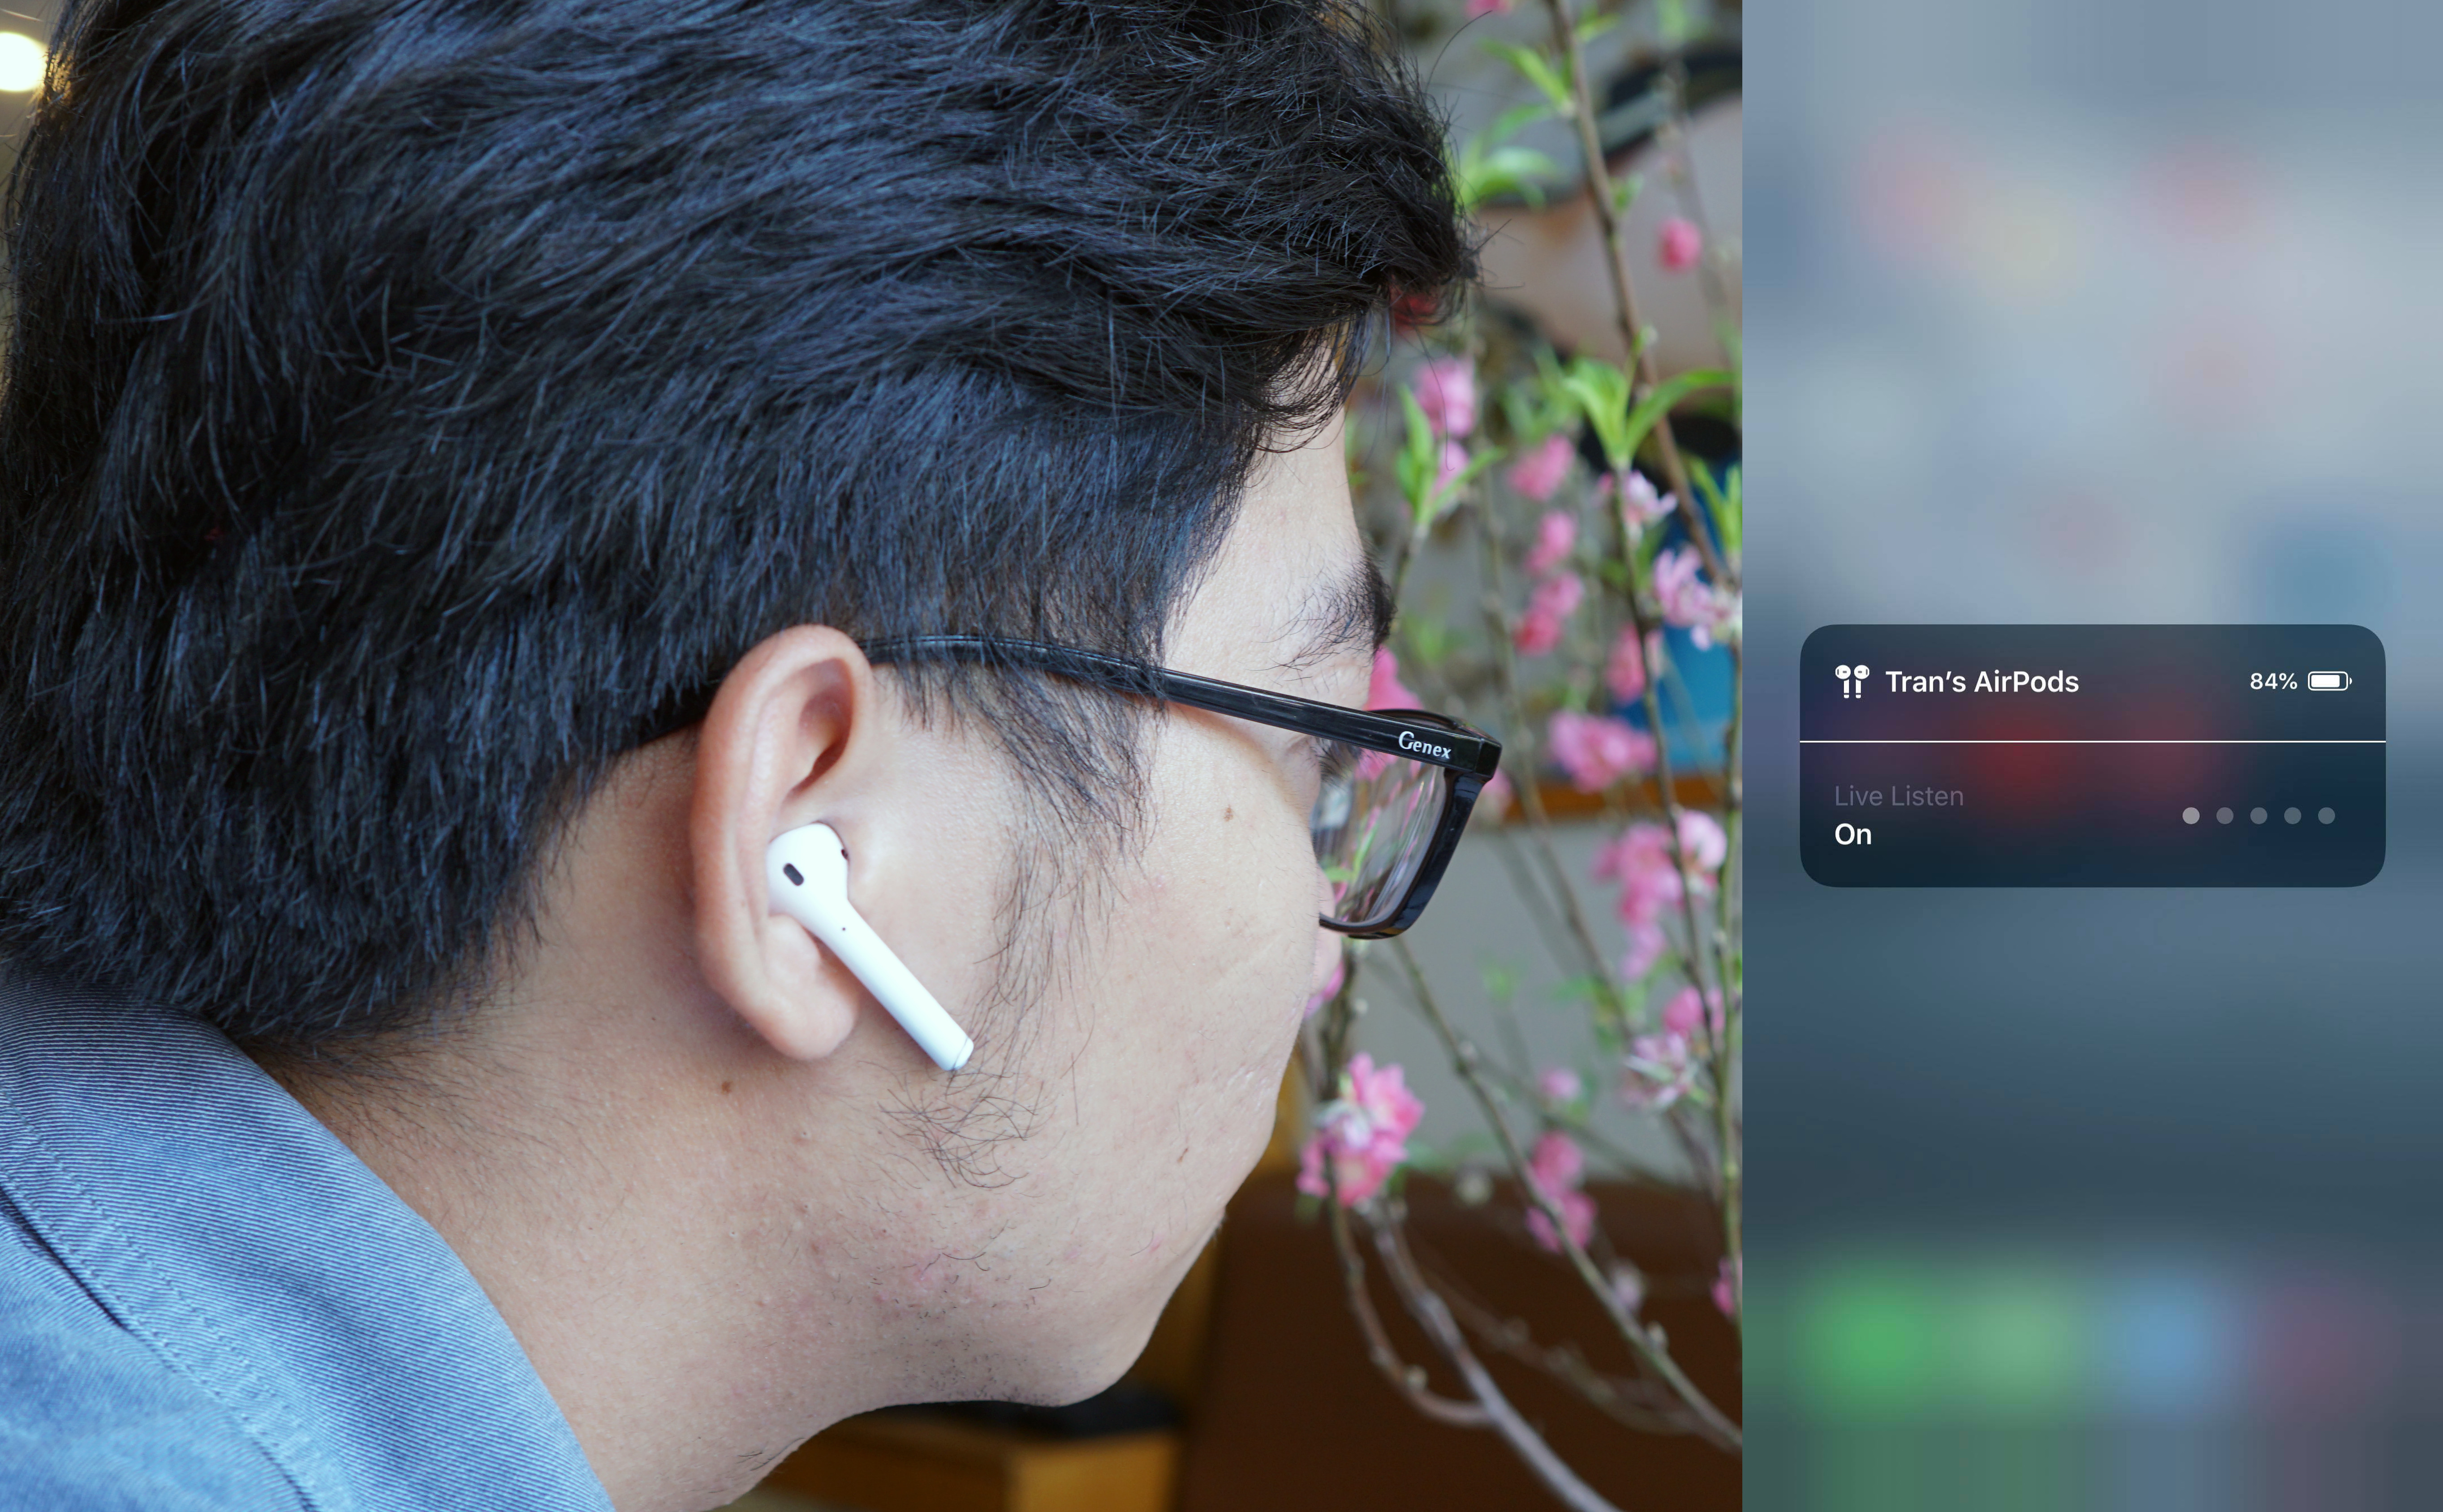 Live Listen trên AirPods: nghe từ xa qua mic iPhone